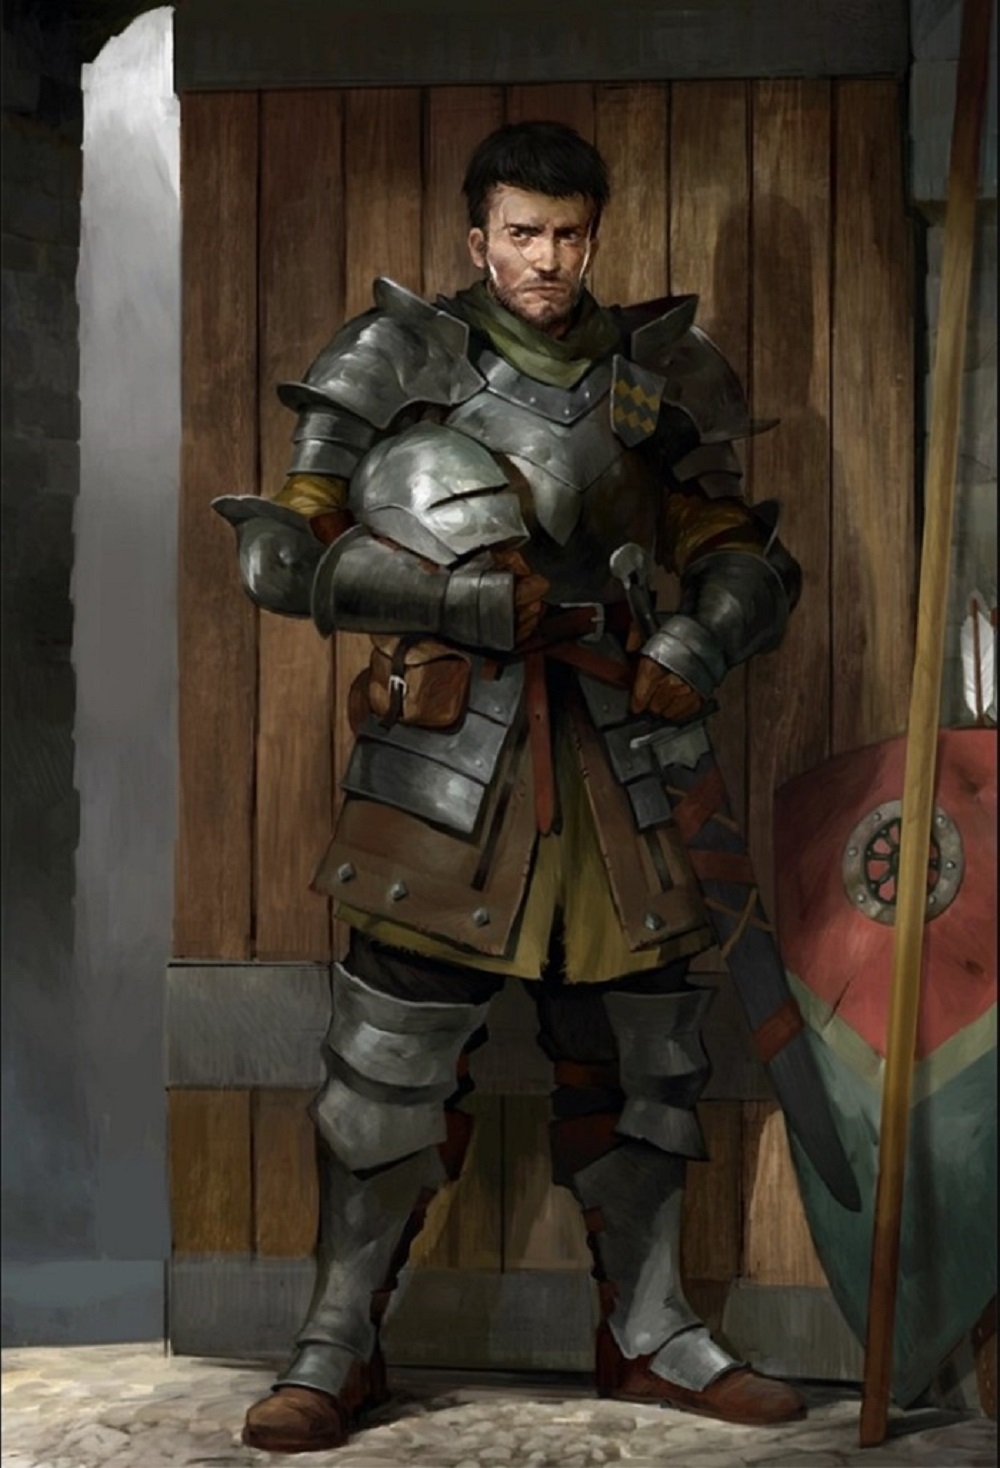 Warden: Kesten